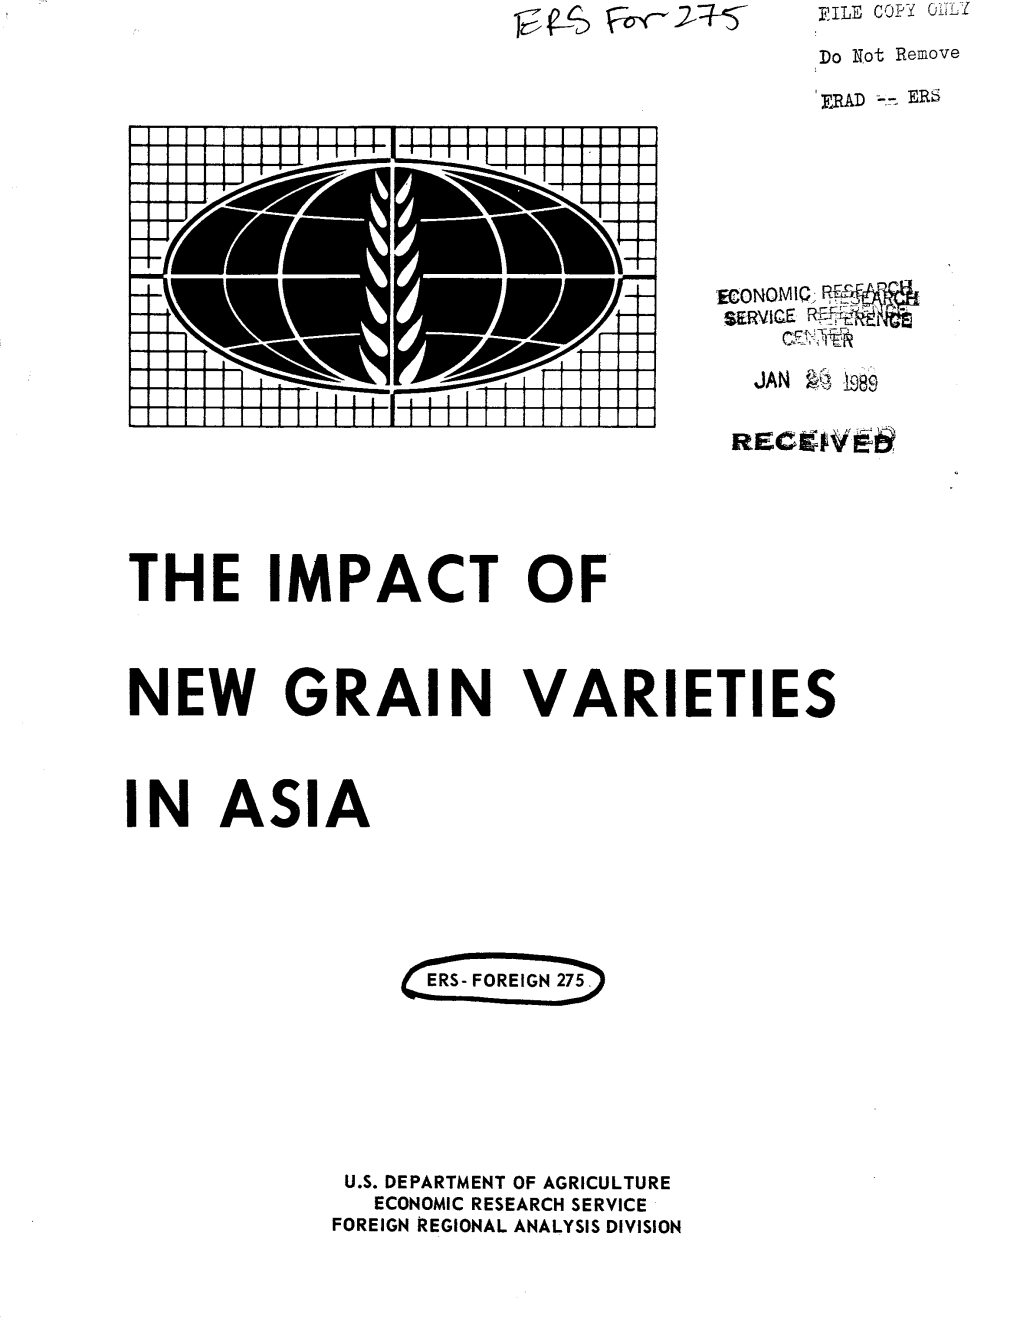 The Impact of New Grain Varieties in Asia